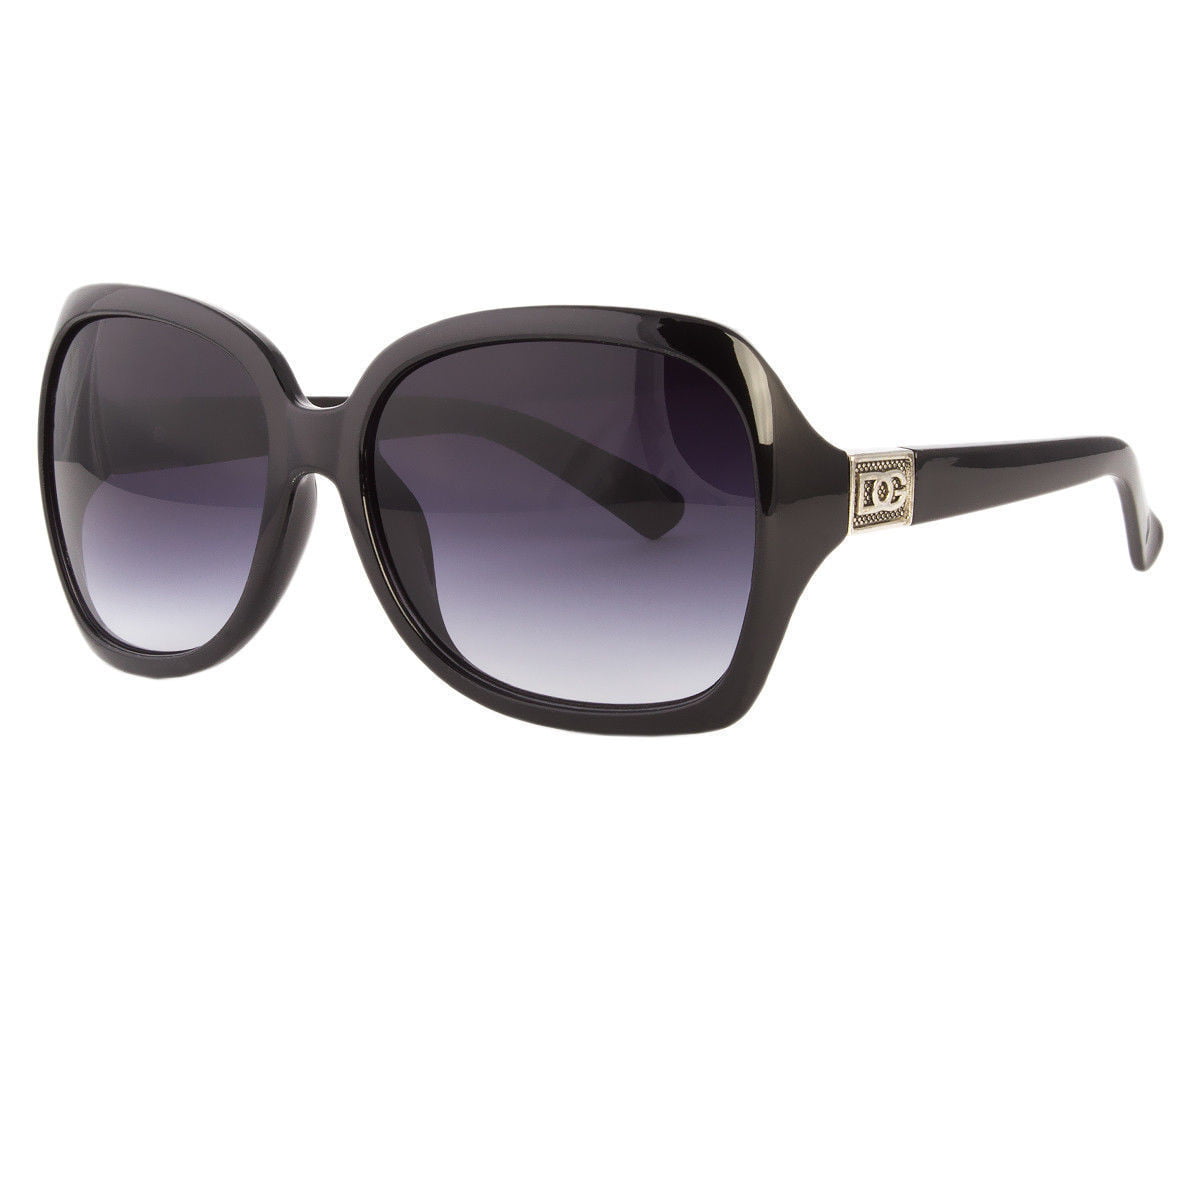 New DG Eyewear Womens Rhinestones Square Wrap Sunglasses Designer Fashion Shades 